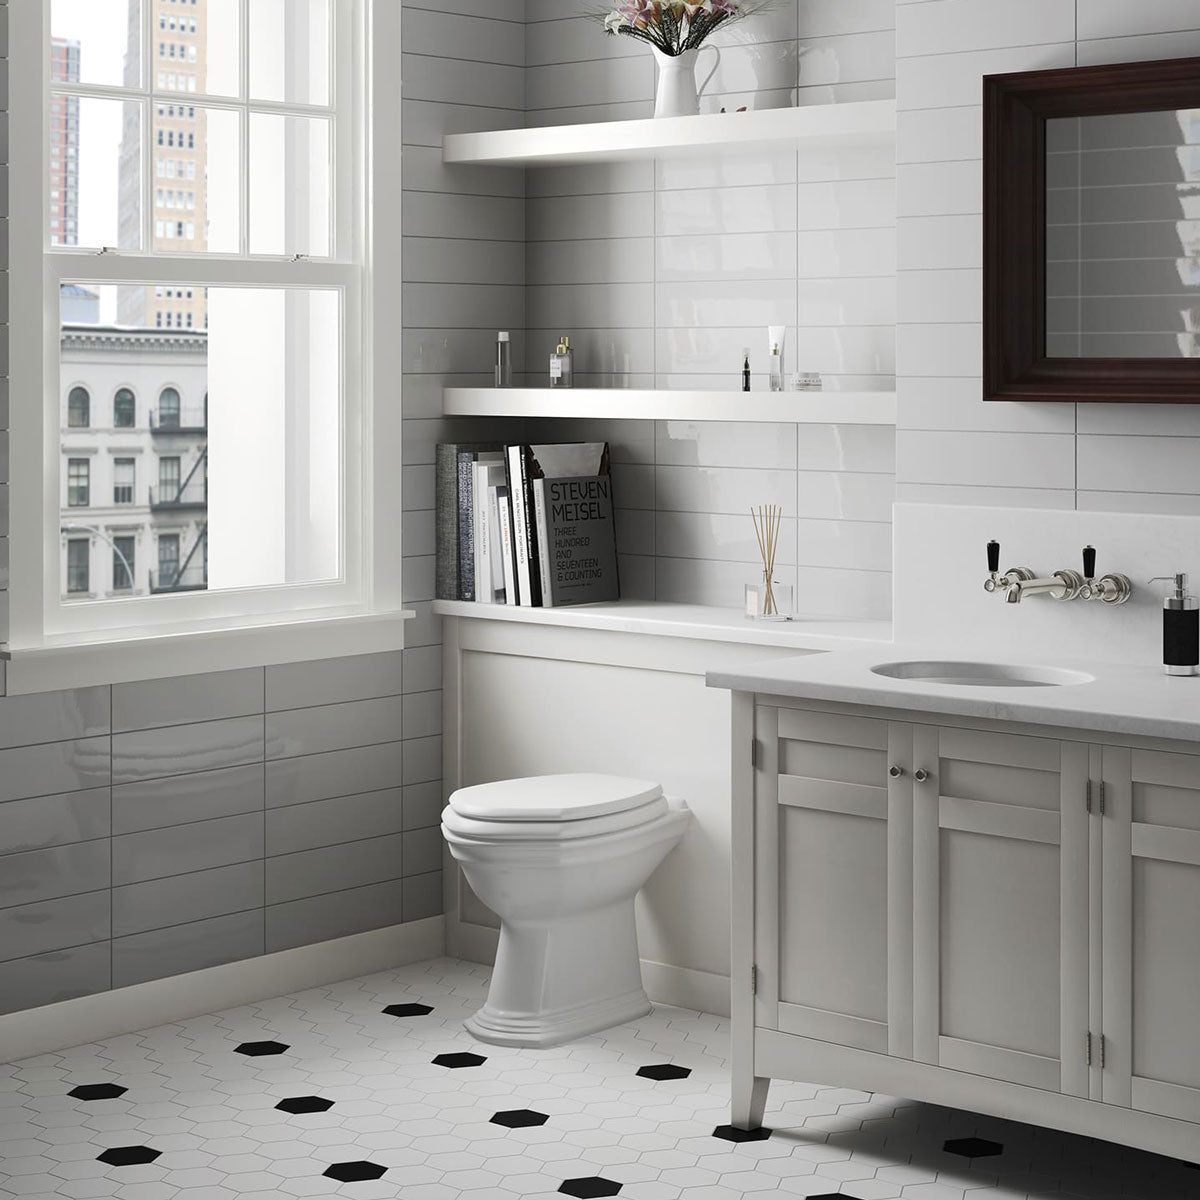 Hexagon - Salle de bain Blanc et Noir / White and Black Bathroom